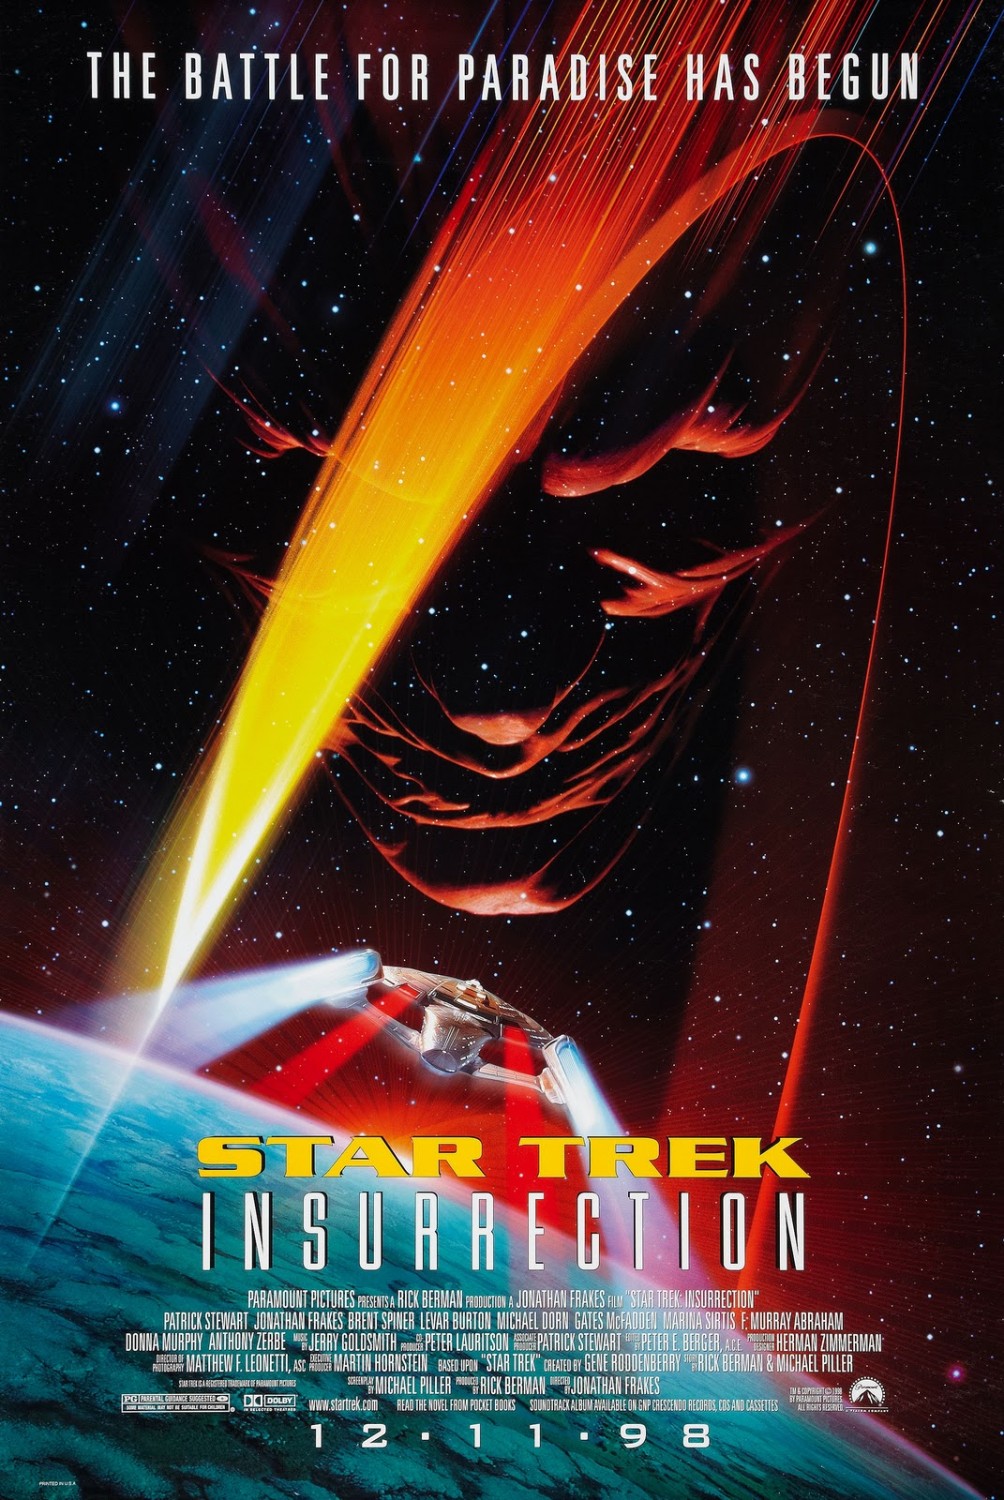 Extra Large Movie Poster Image for Star Trek: Insurrection 